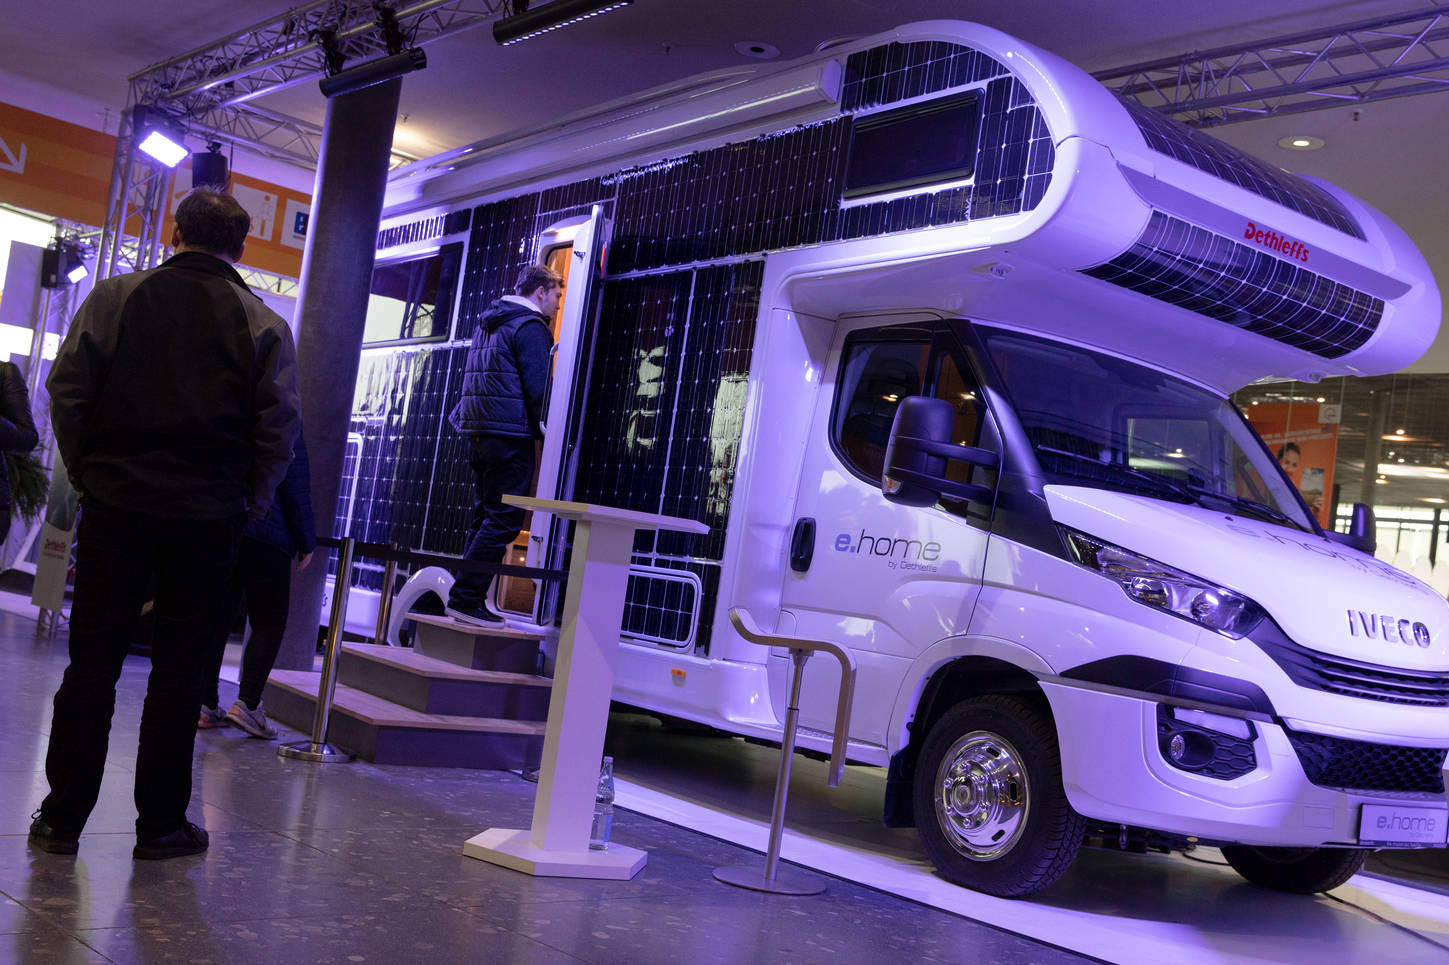 Fahren Fiat-Wohnmobile ab 2030 nur noch elektrisch? - Campingszene -  Inspiration - Berger Blog